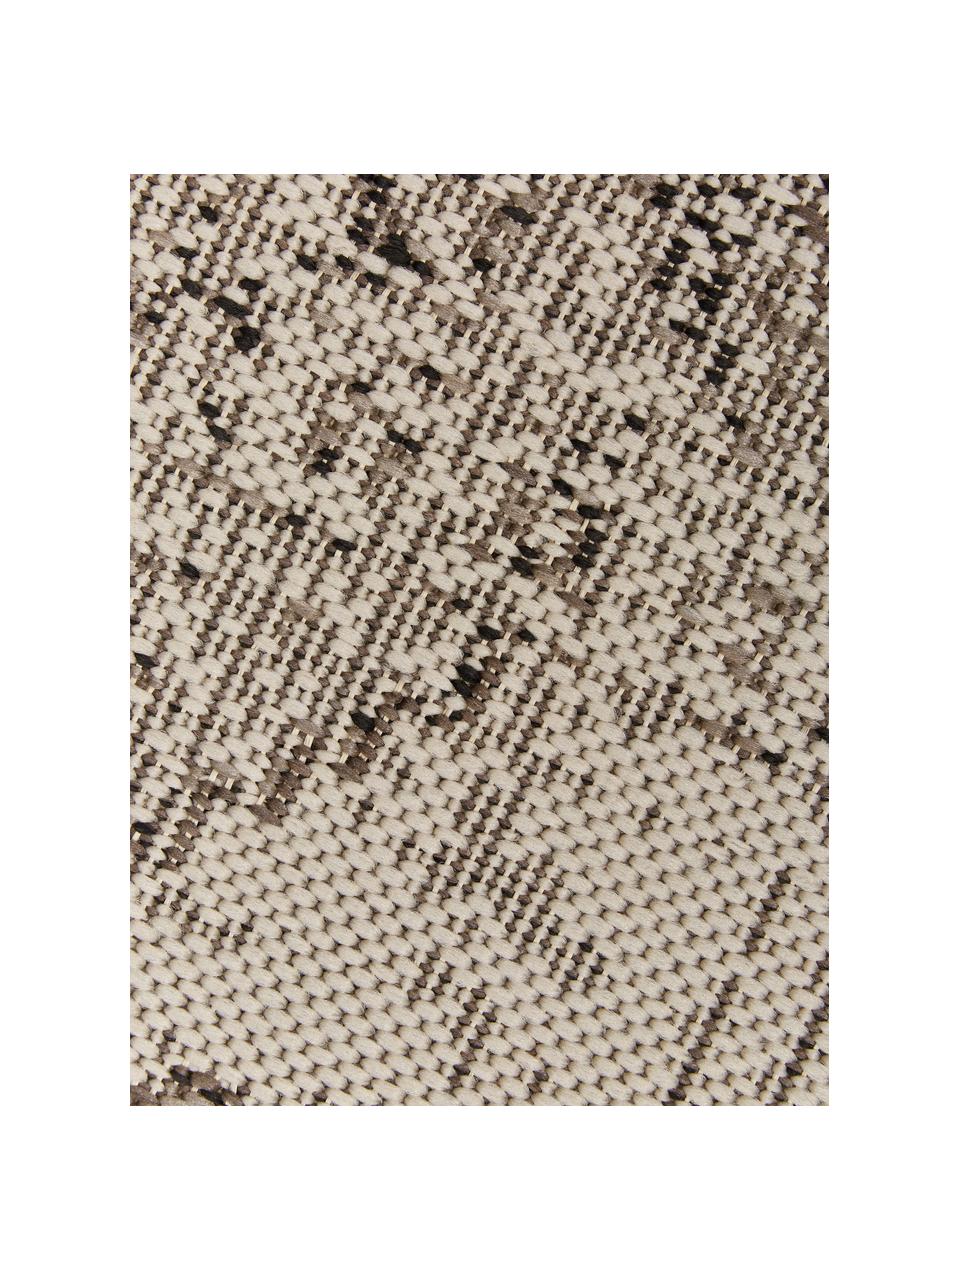 Tappeto da interno-esterno Navarino, 100% polipropilene, Tonalità beige, Larg. 80 x Lung. 150 cm (taglia XS)